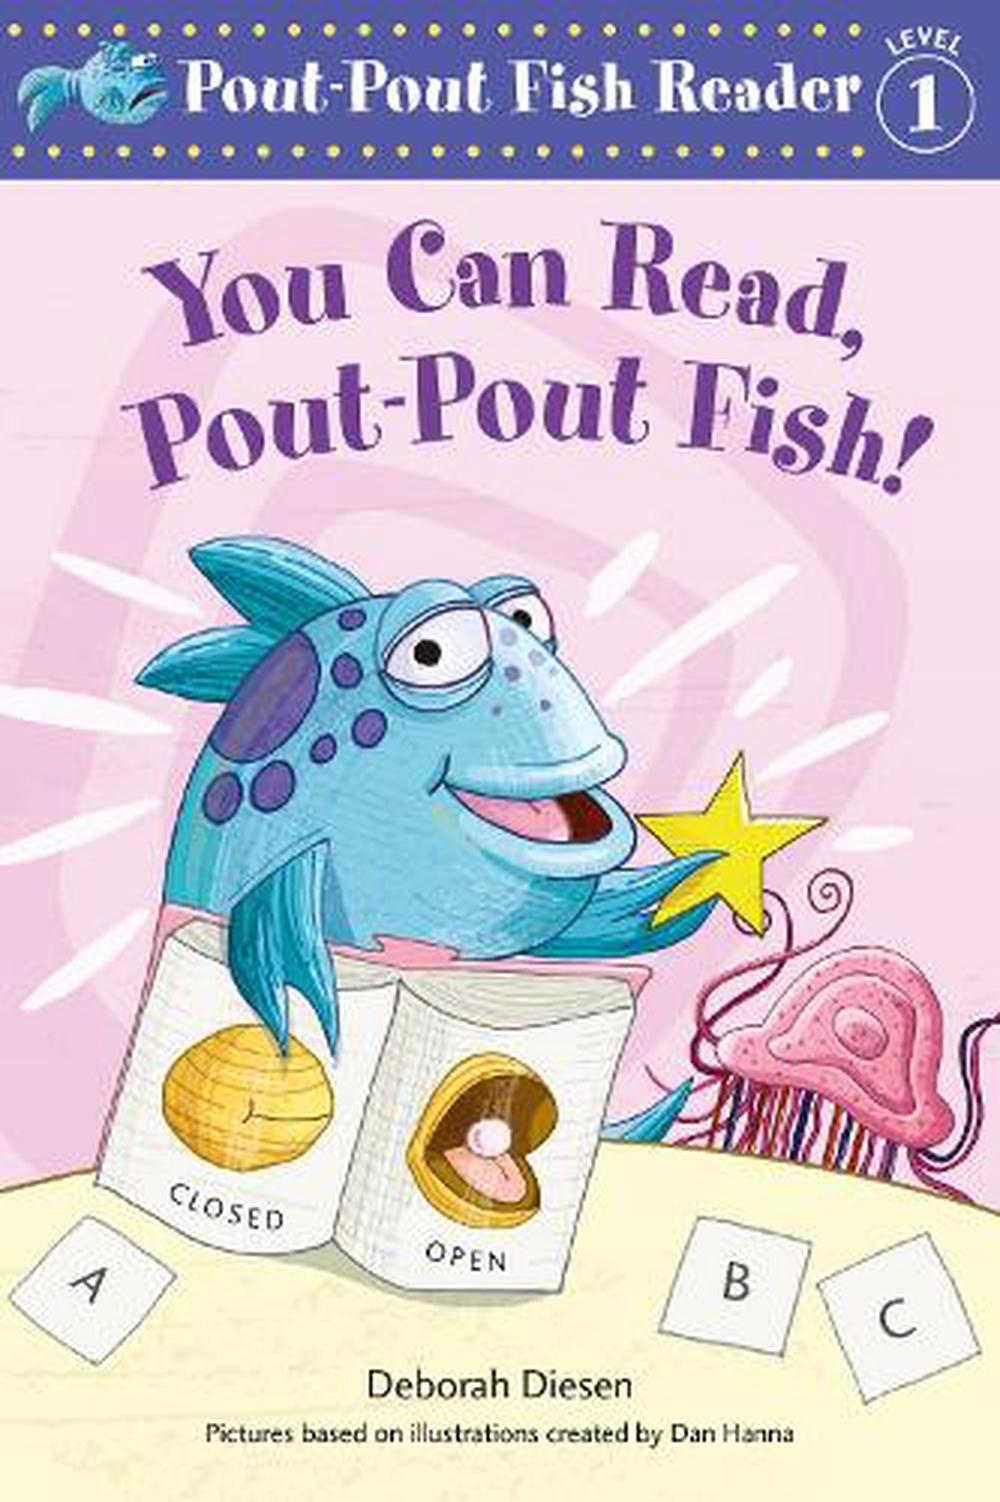 You Can Read, PoutPout Fish! by Deborah Diesen (English